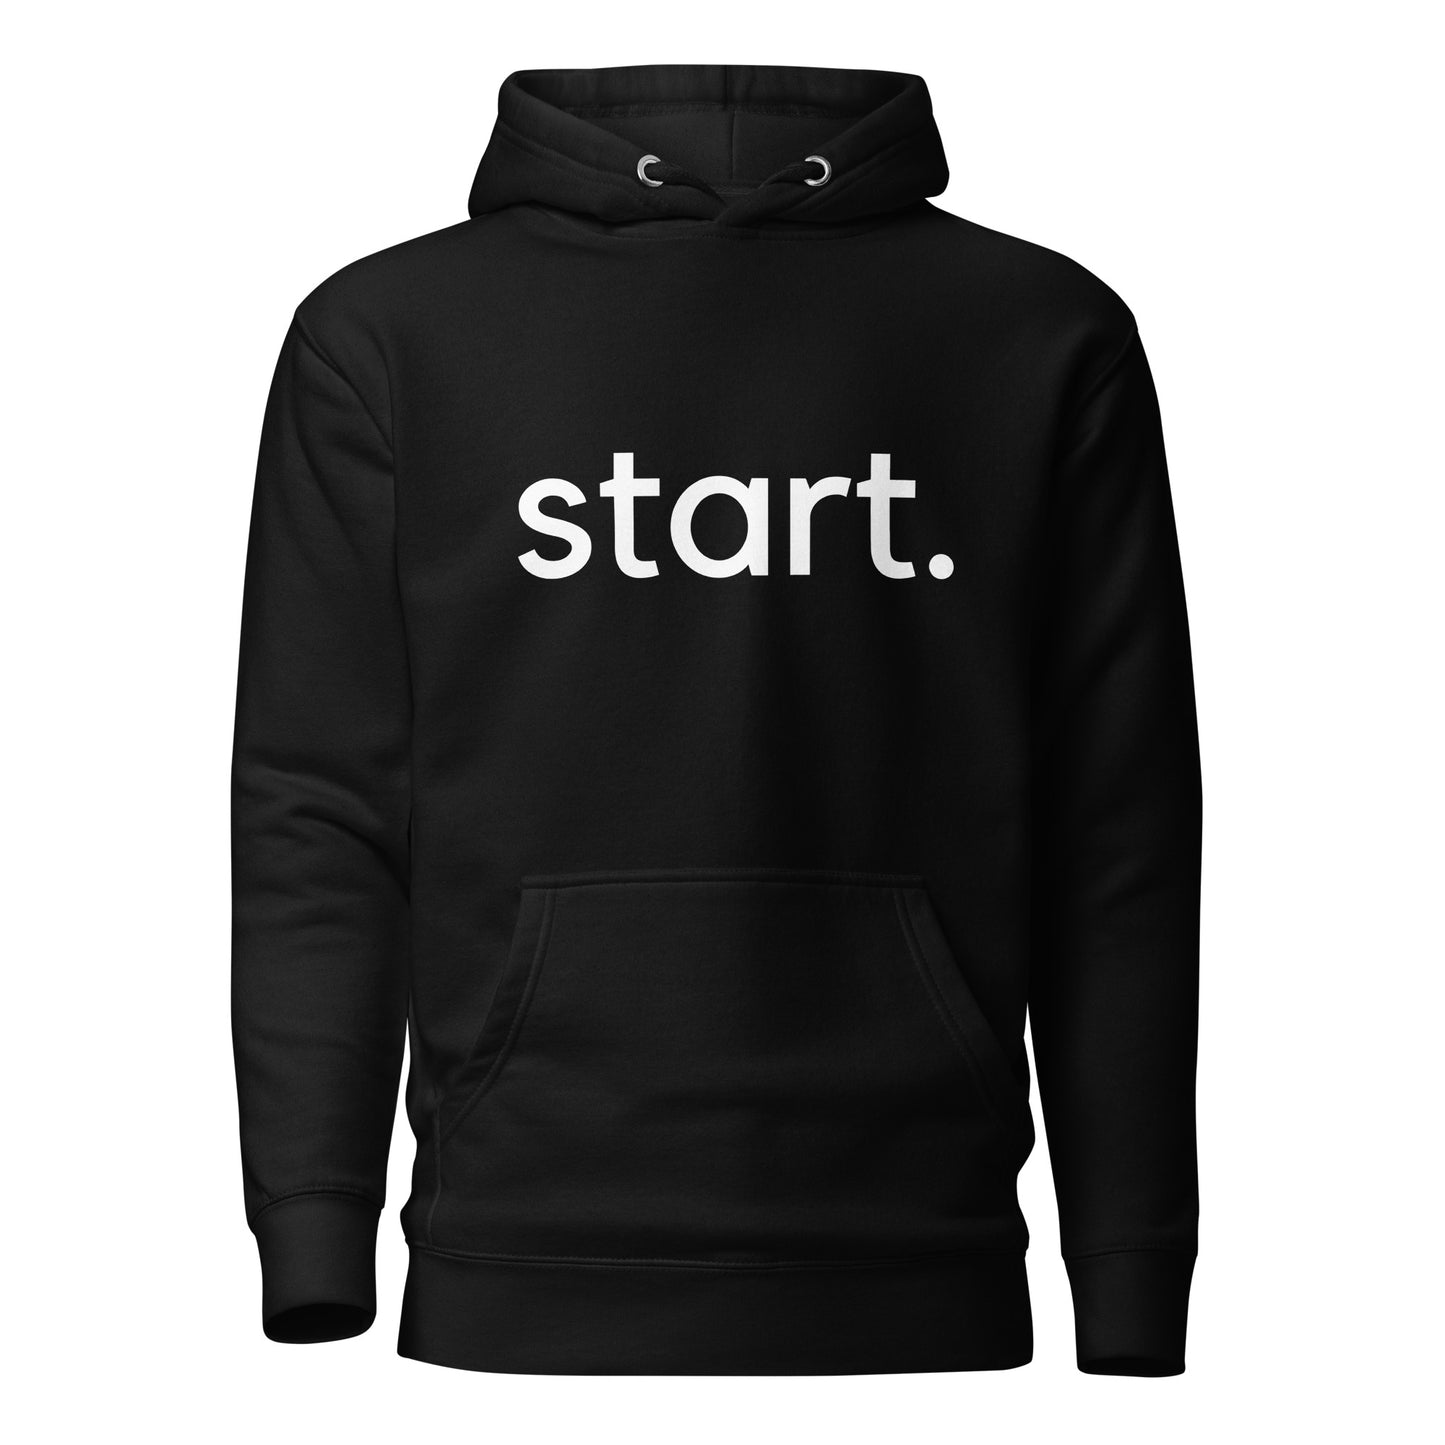 this is my start hoodie